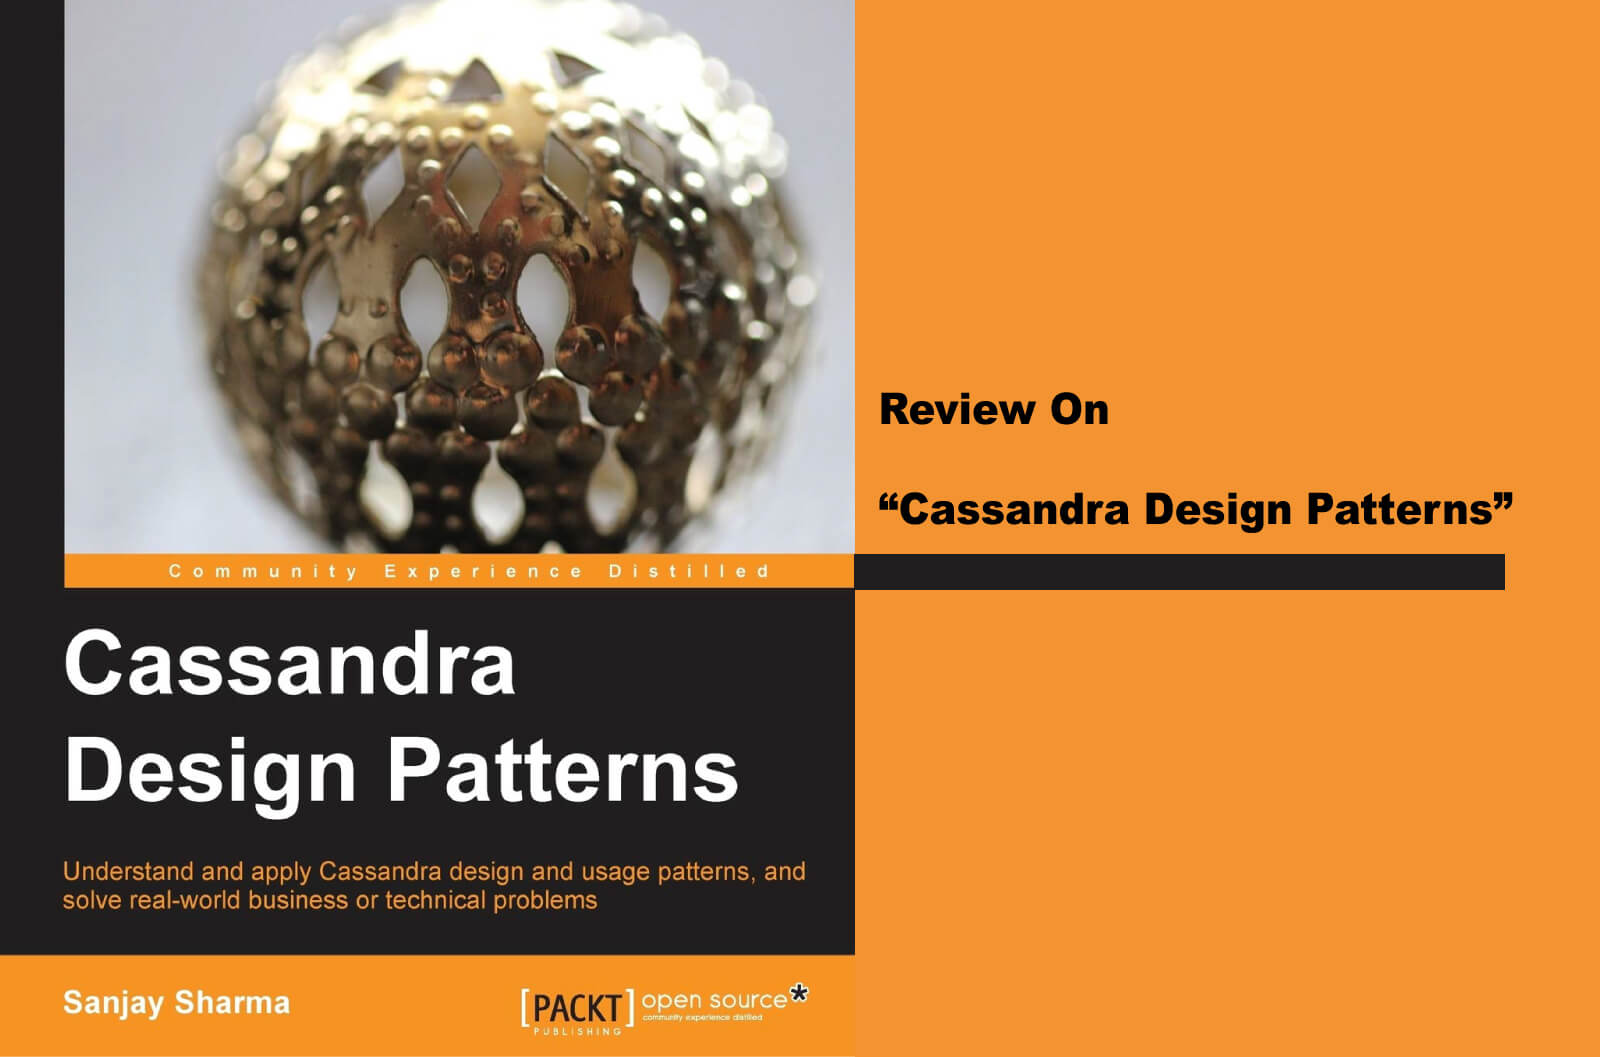 Review on “Cassandra Design Patterns” book